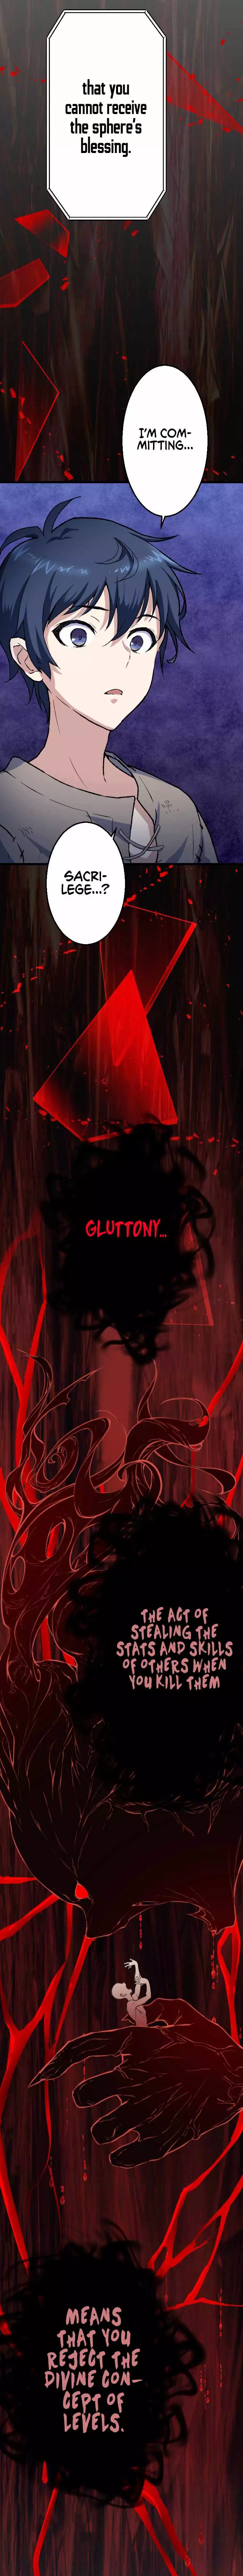 Berserk Of Gluttony [Webtoon] - 6 page 7-64e0a73a